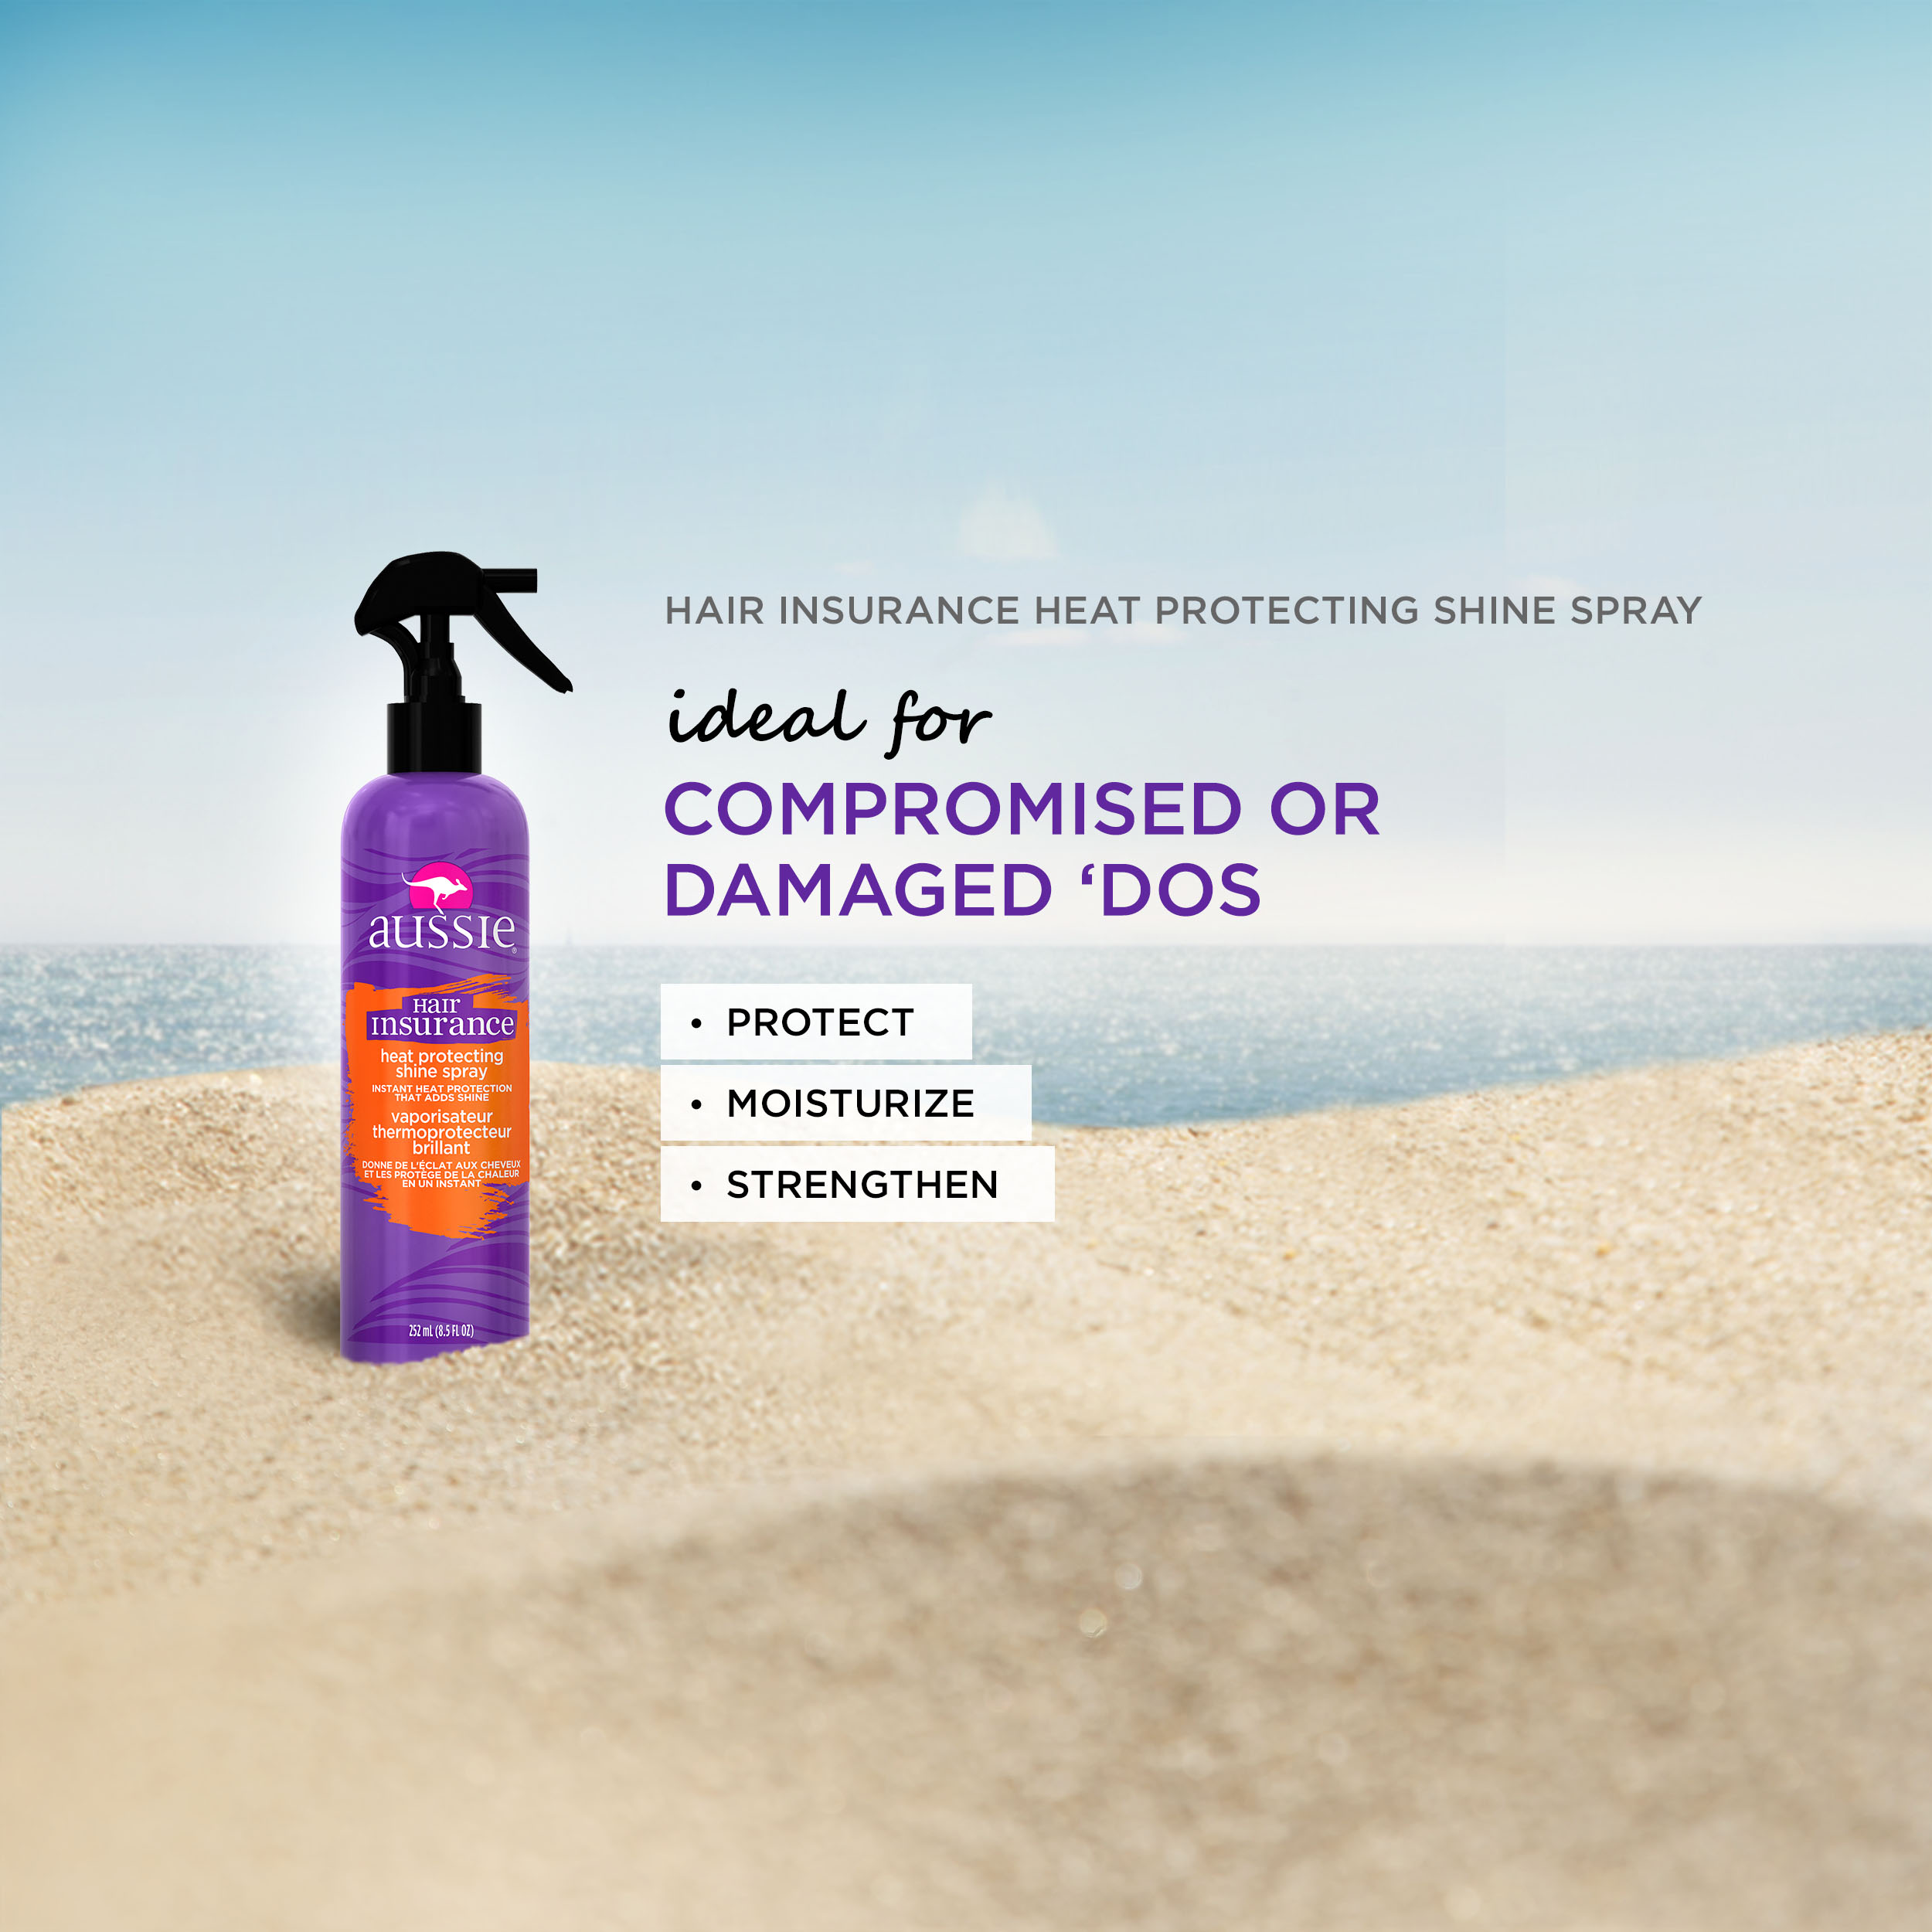 Aussie Hair Insurance Heat Protecting Hair Shine Spray 8.5 Fl Oz - image 2 of 6